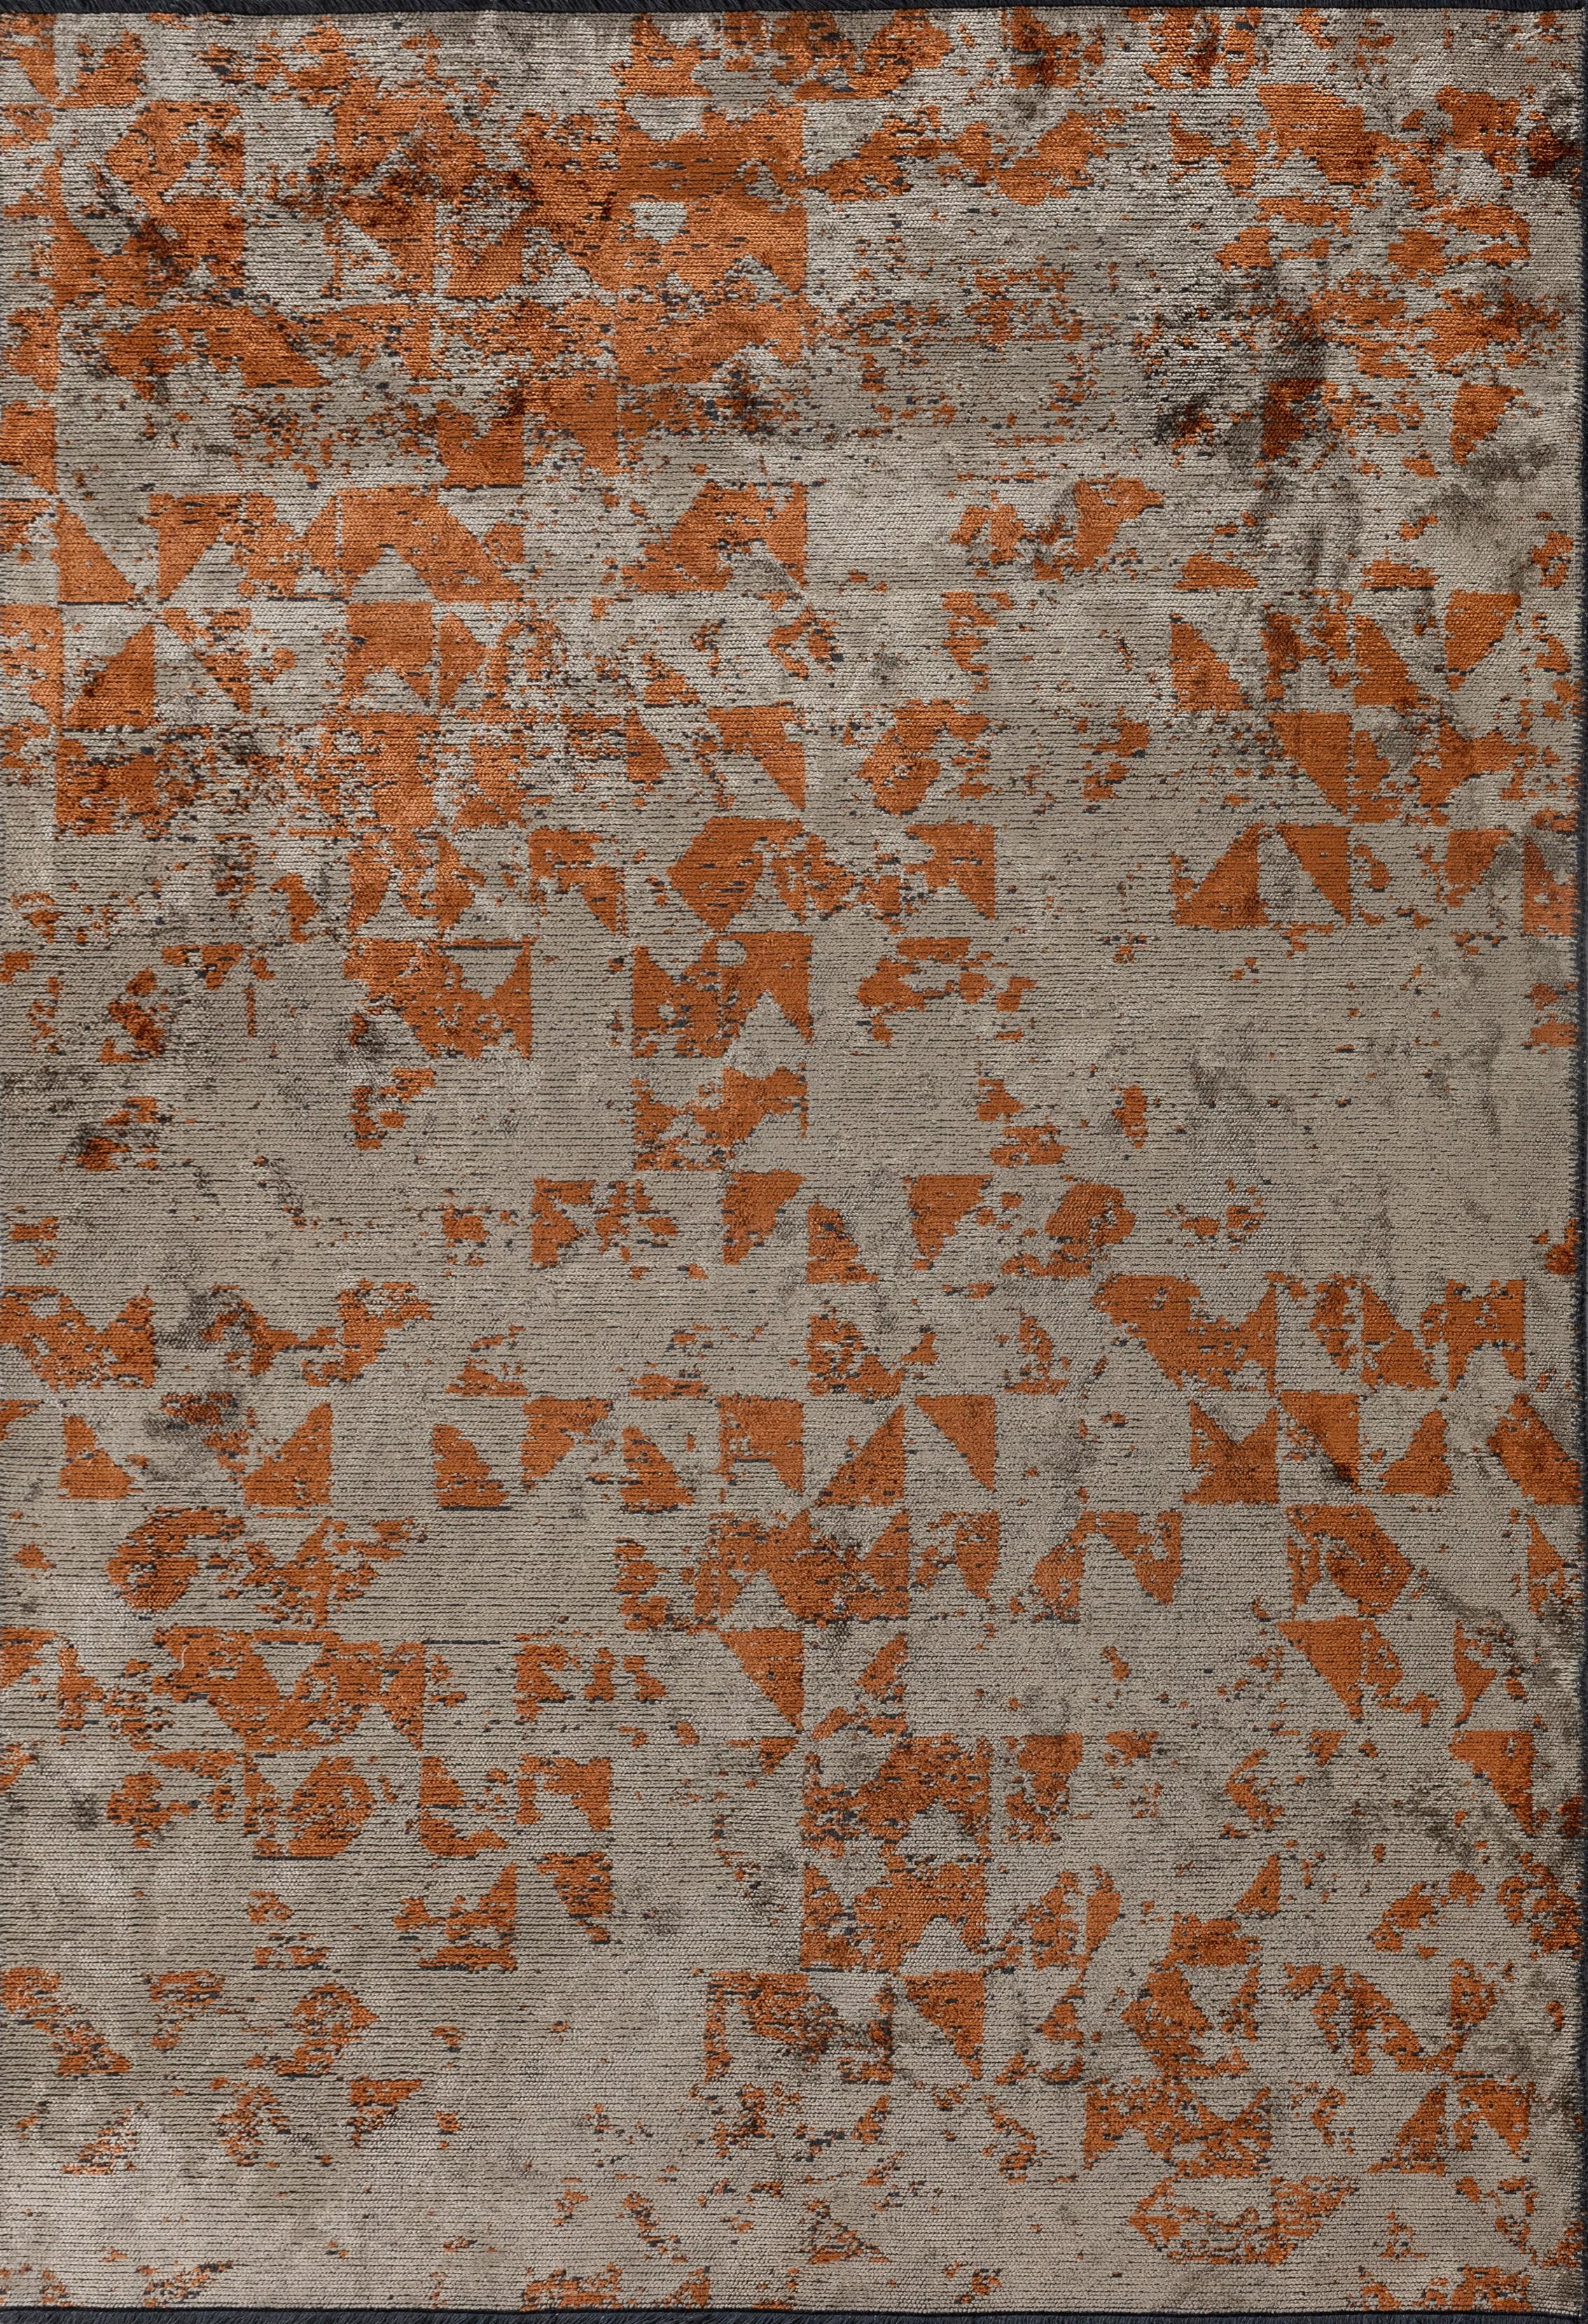 For Sale:  (Orange) Modern Camouflage Luxury Hand-Finished Area Rug